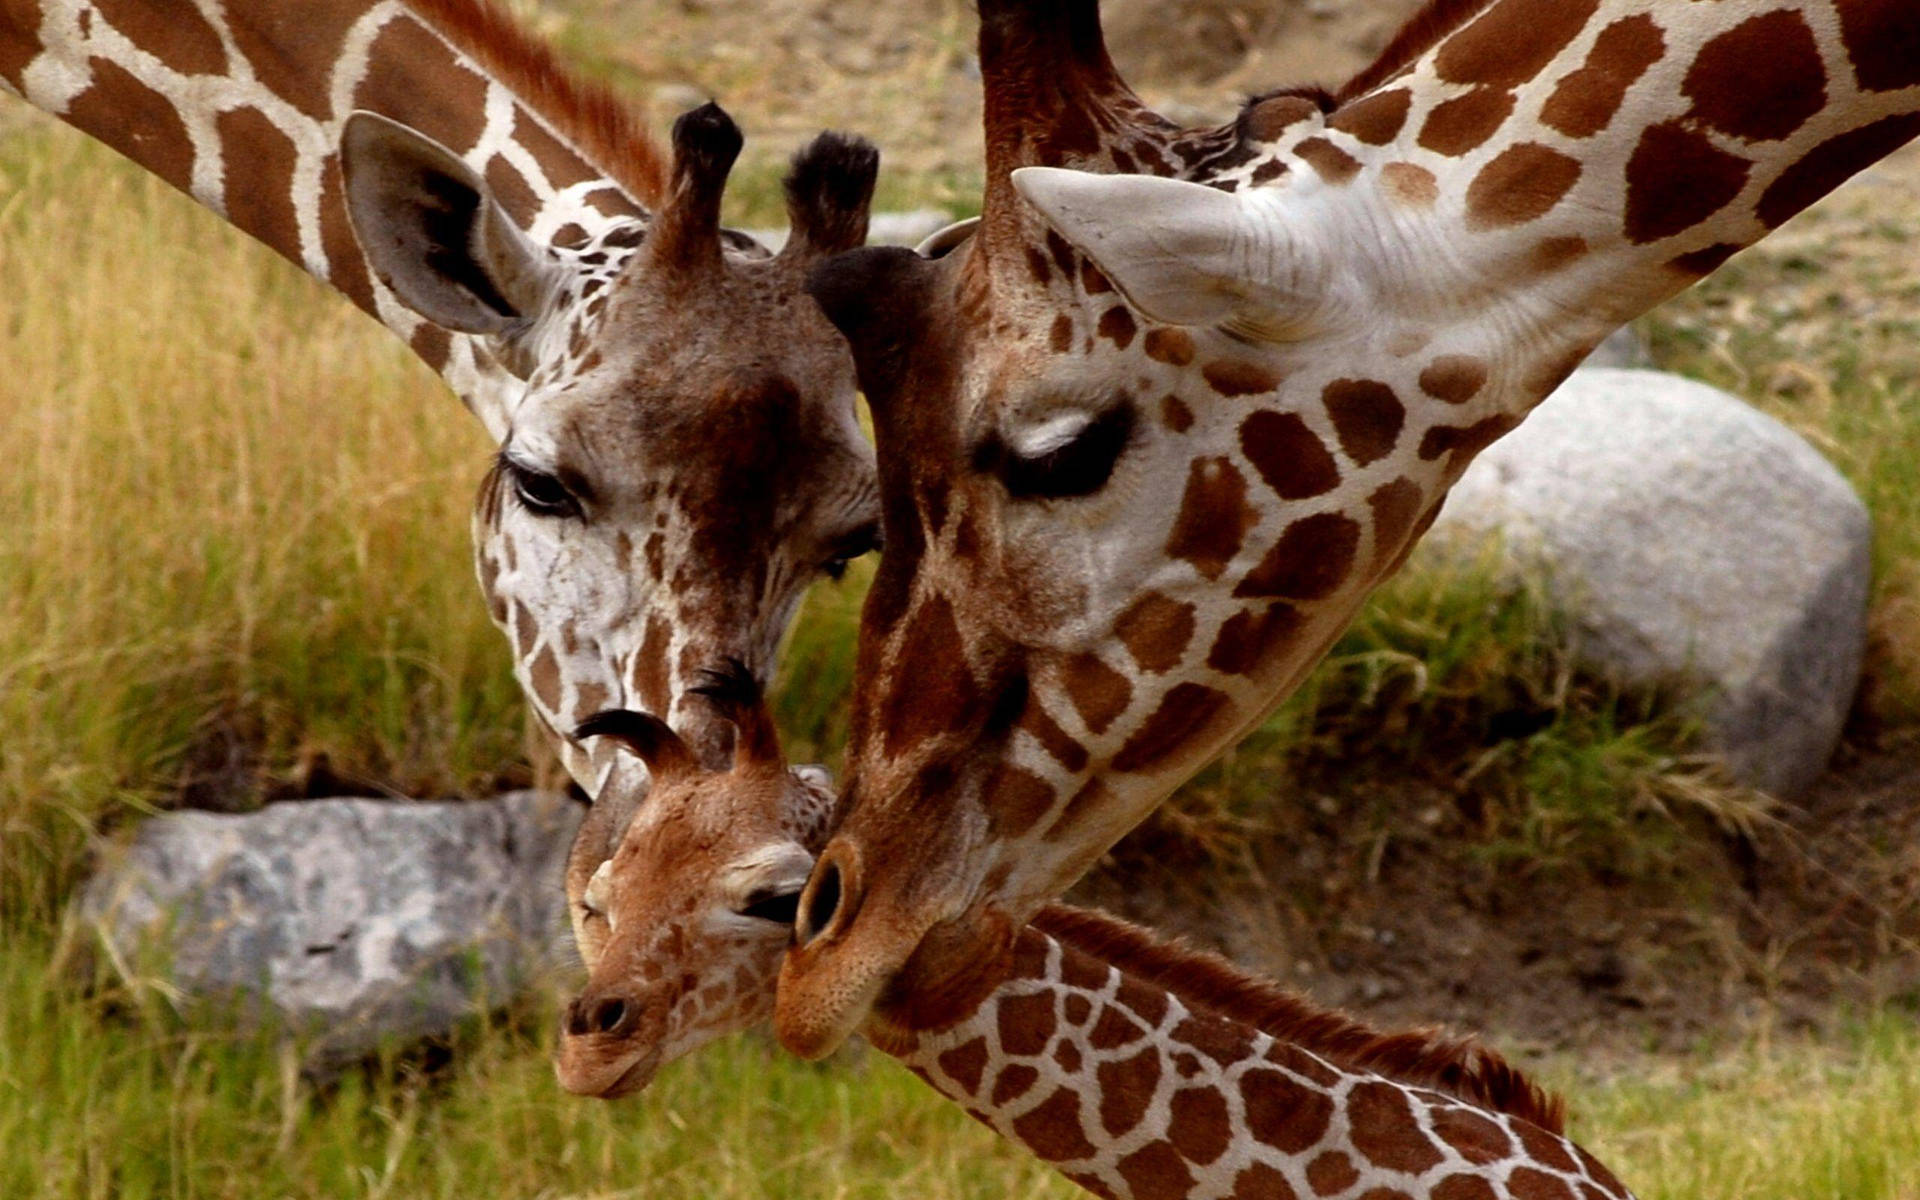 A Tender Moment Of A Baby Giraffe Being Cuddled